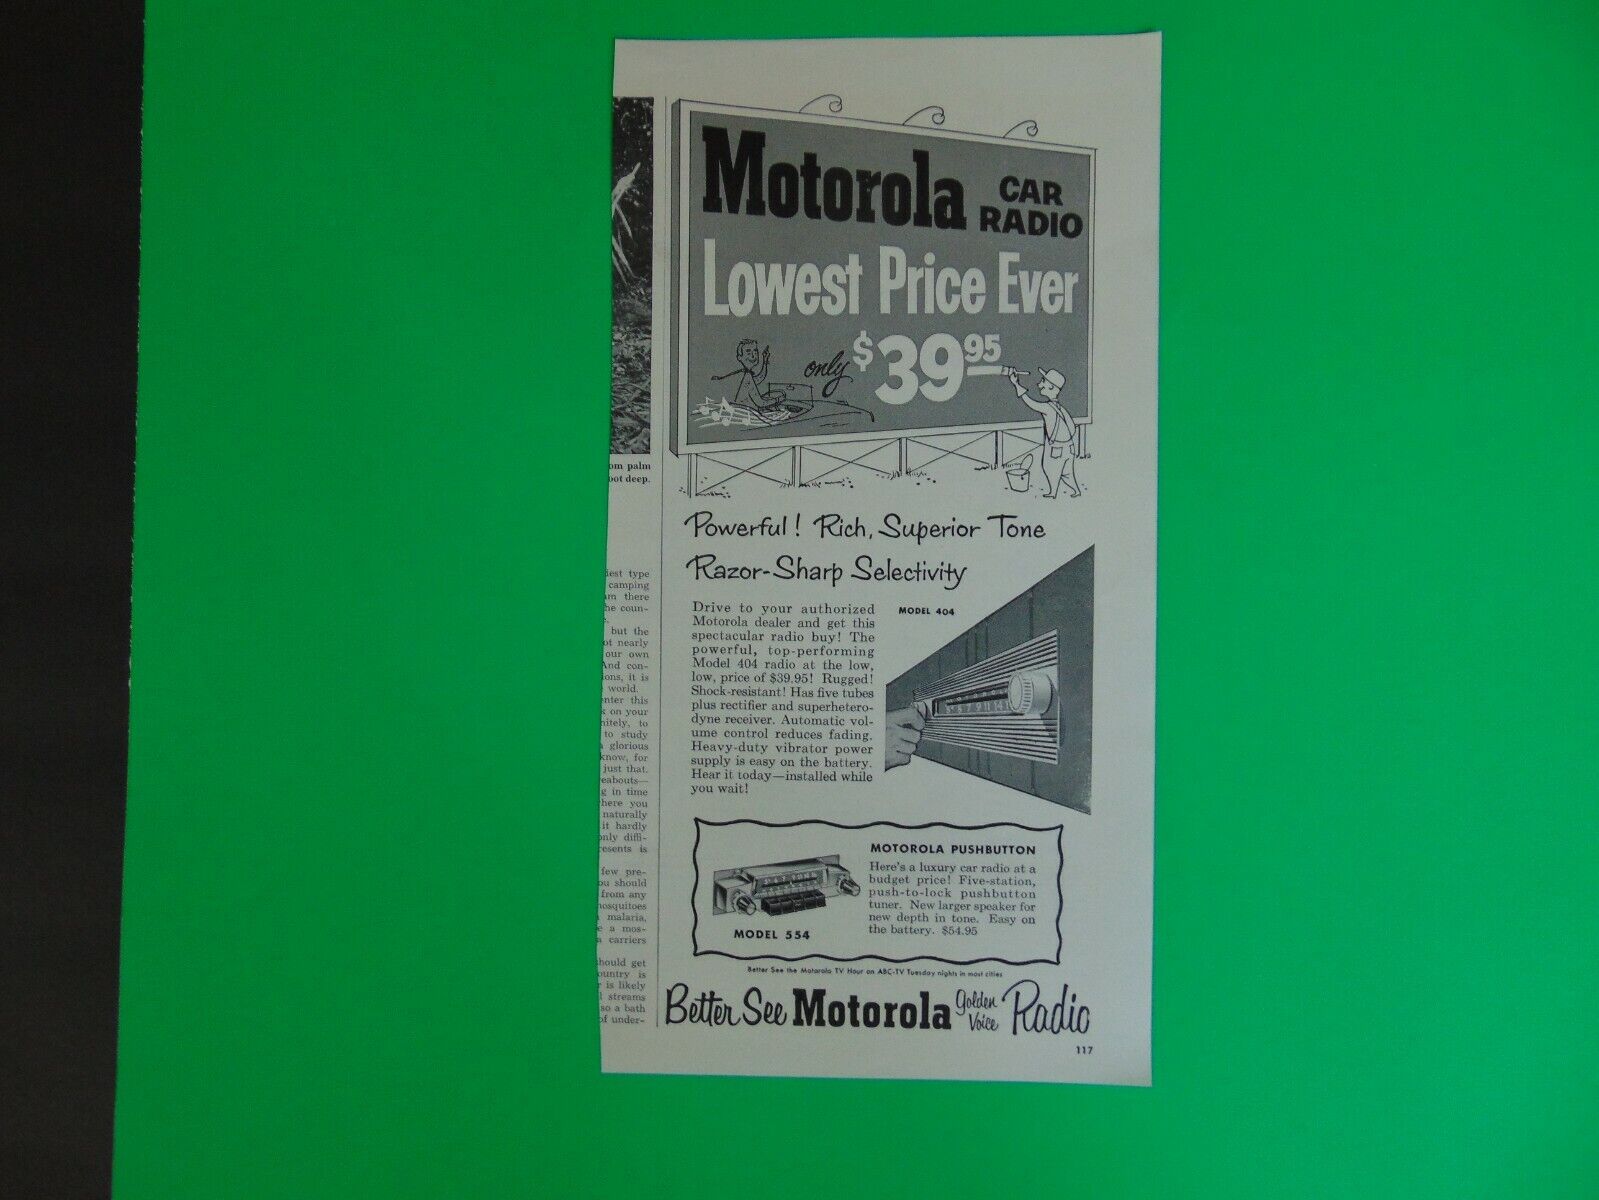 1954 MOTOROLA CAR RADIO Lowest Price Ever $39.95 vintage art print ad